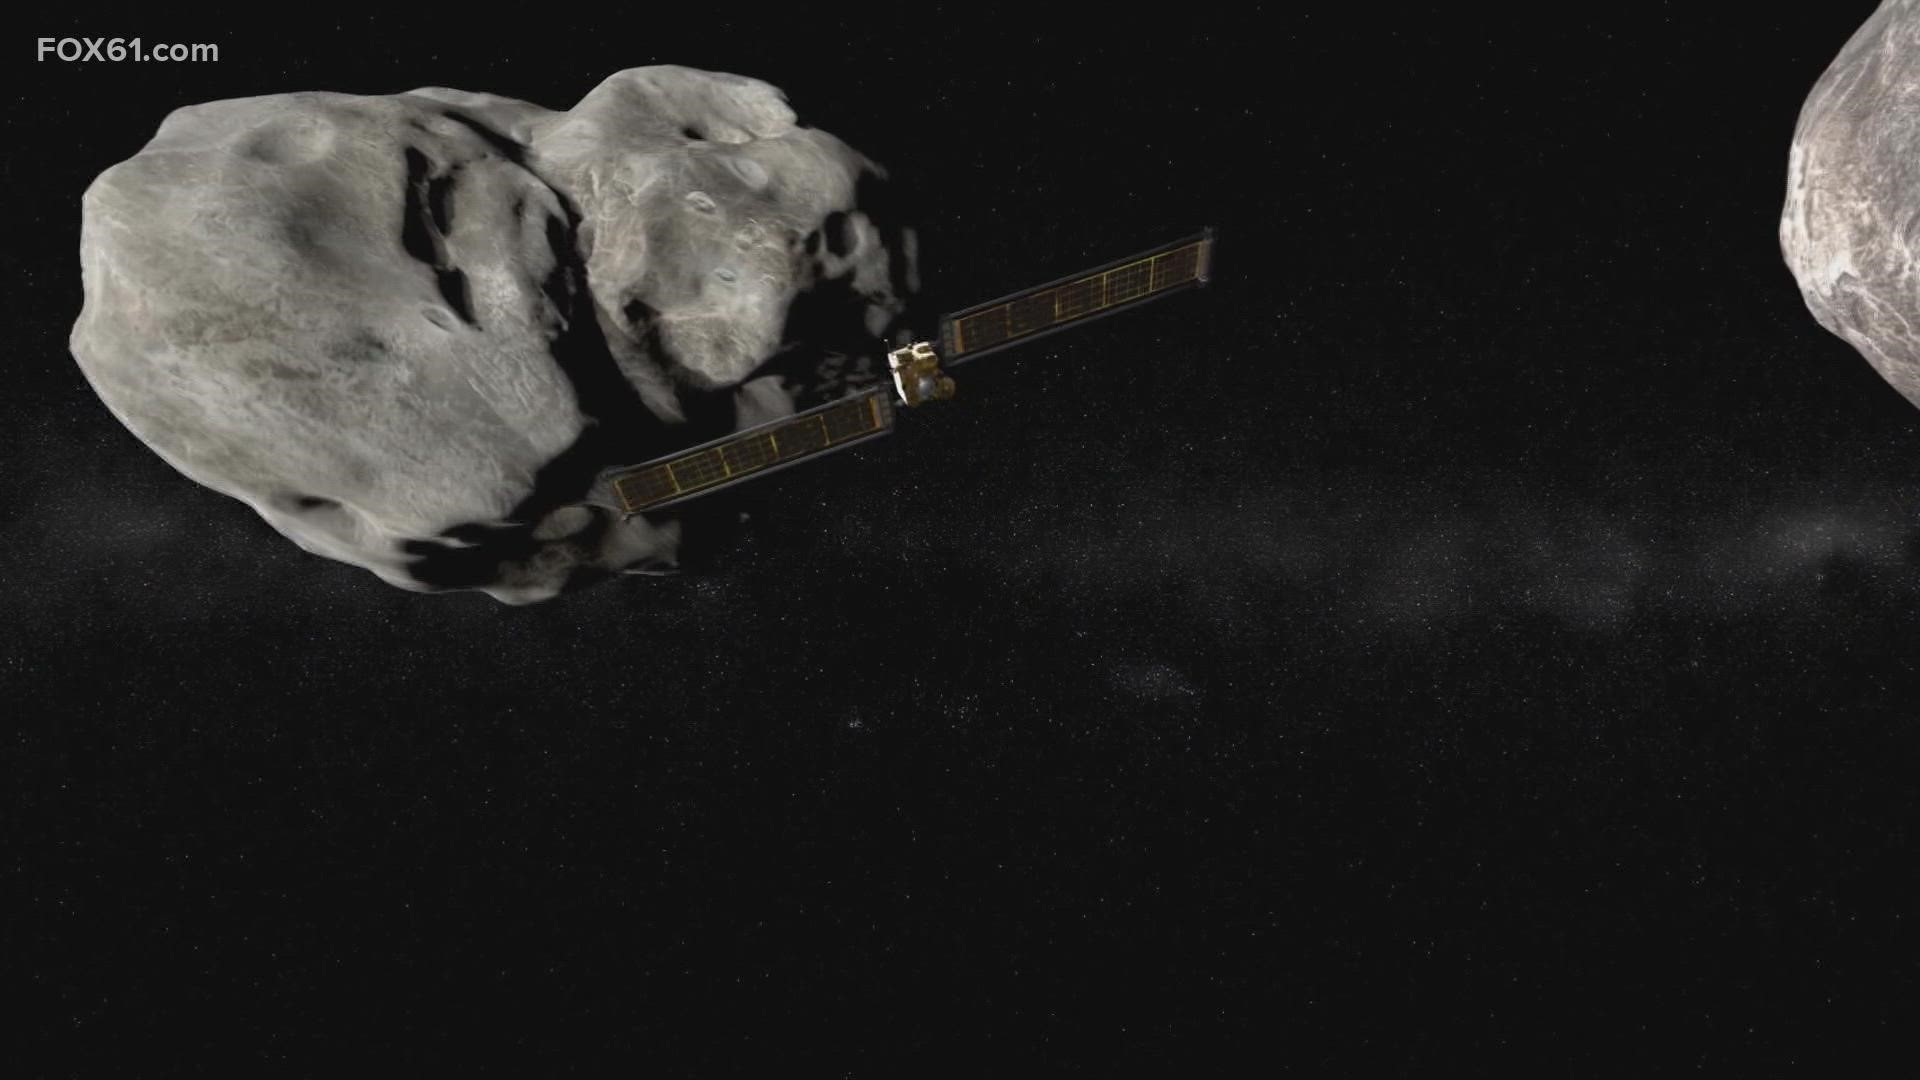 Testing an asteroid defense